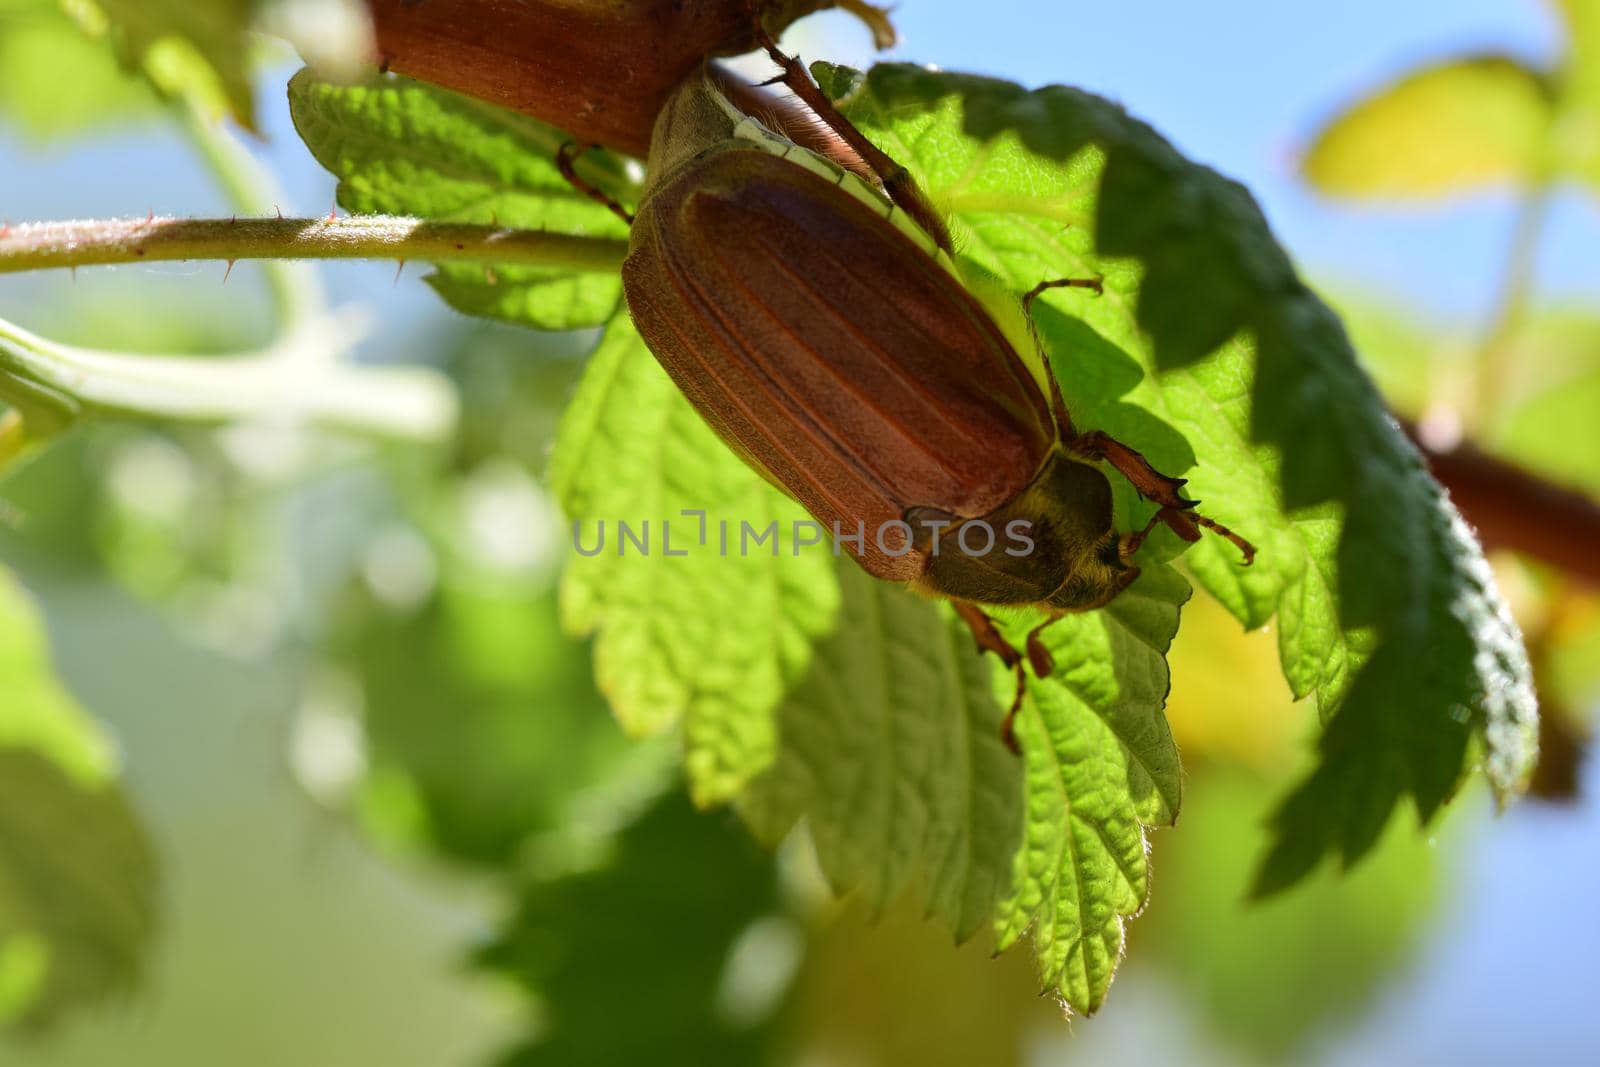 A may beetle sits upside down under a raspberry leaf